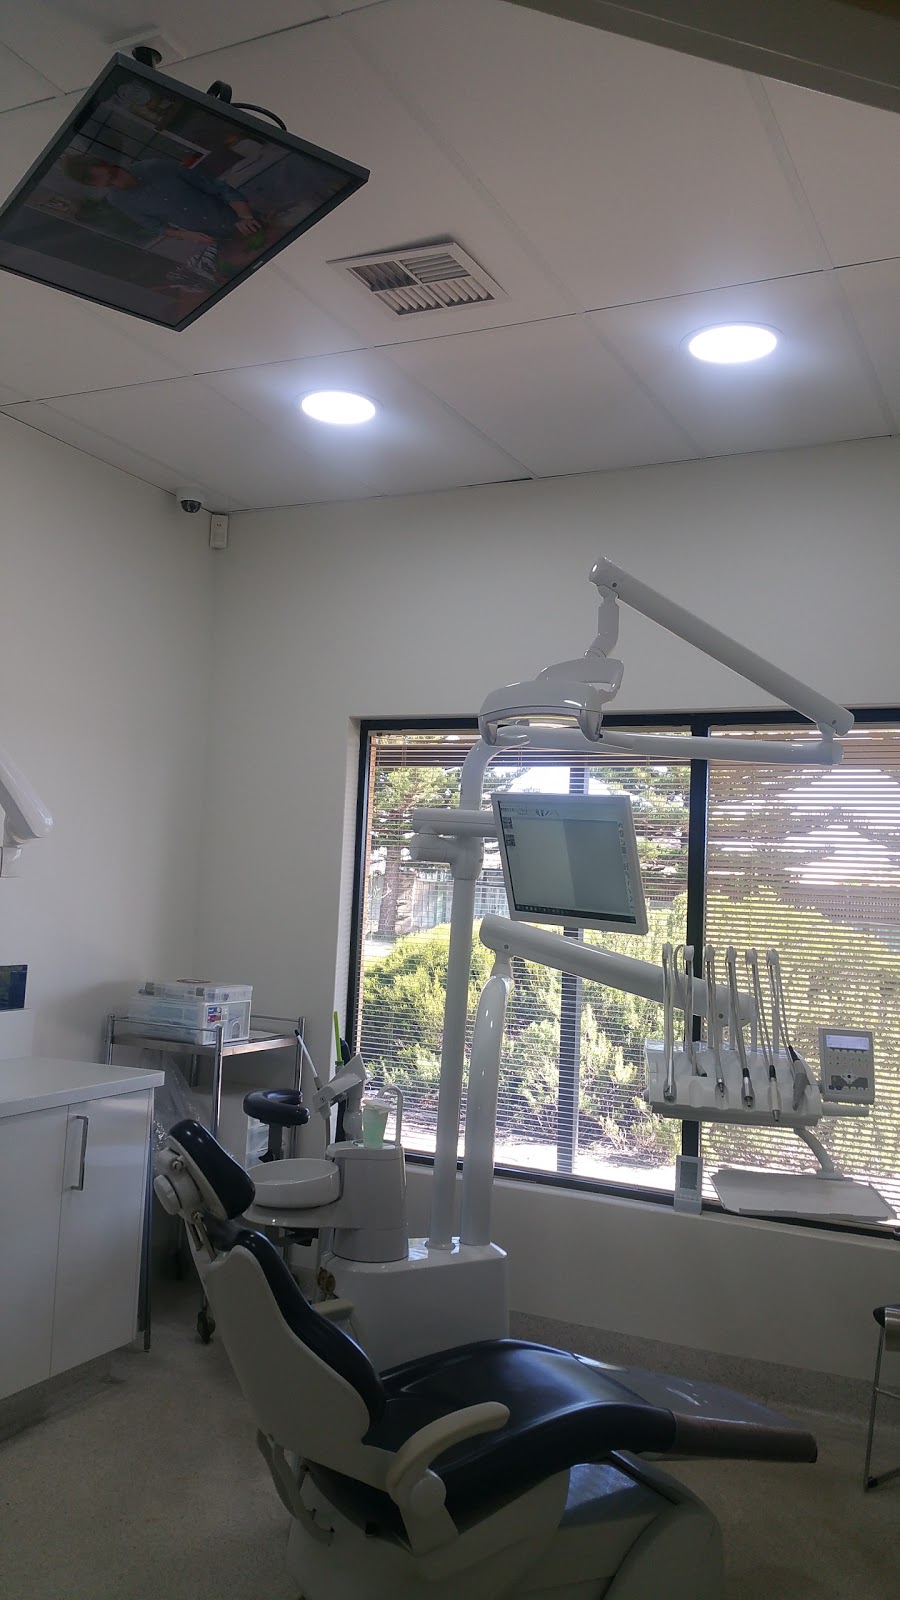 Anchorage Dental Care | dentist | 1/6 Rothesay Heights, Mindarie WA 6030, Australia | 0894077888 OR +61 8 9407 7888